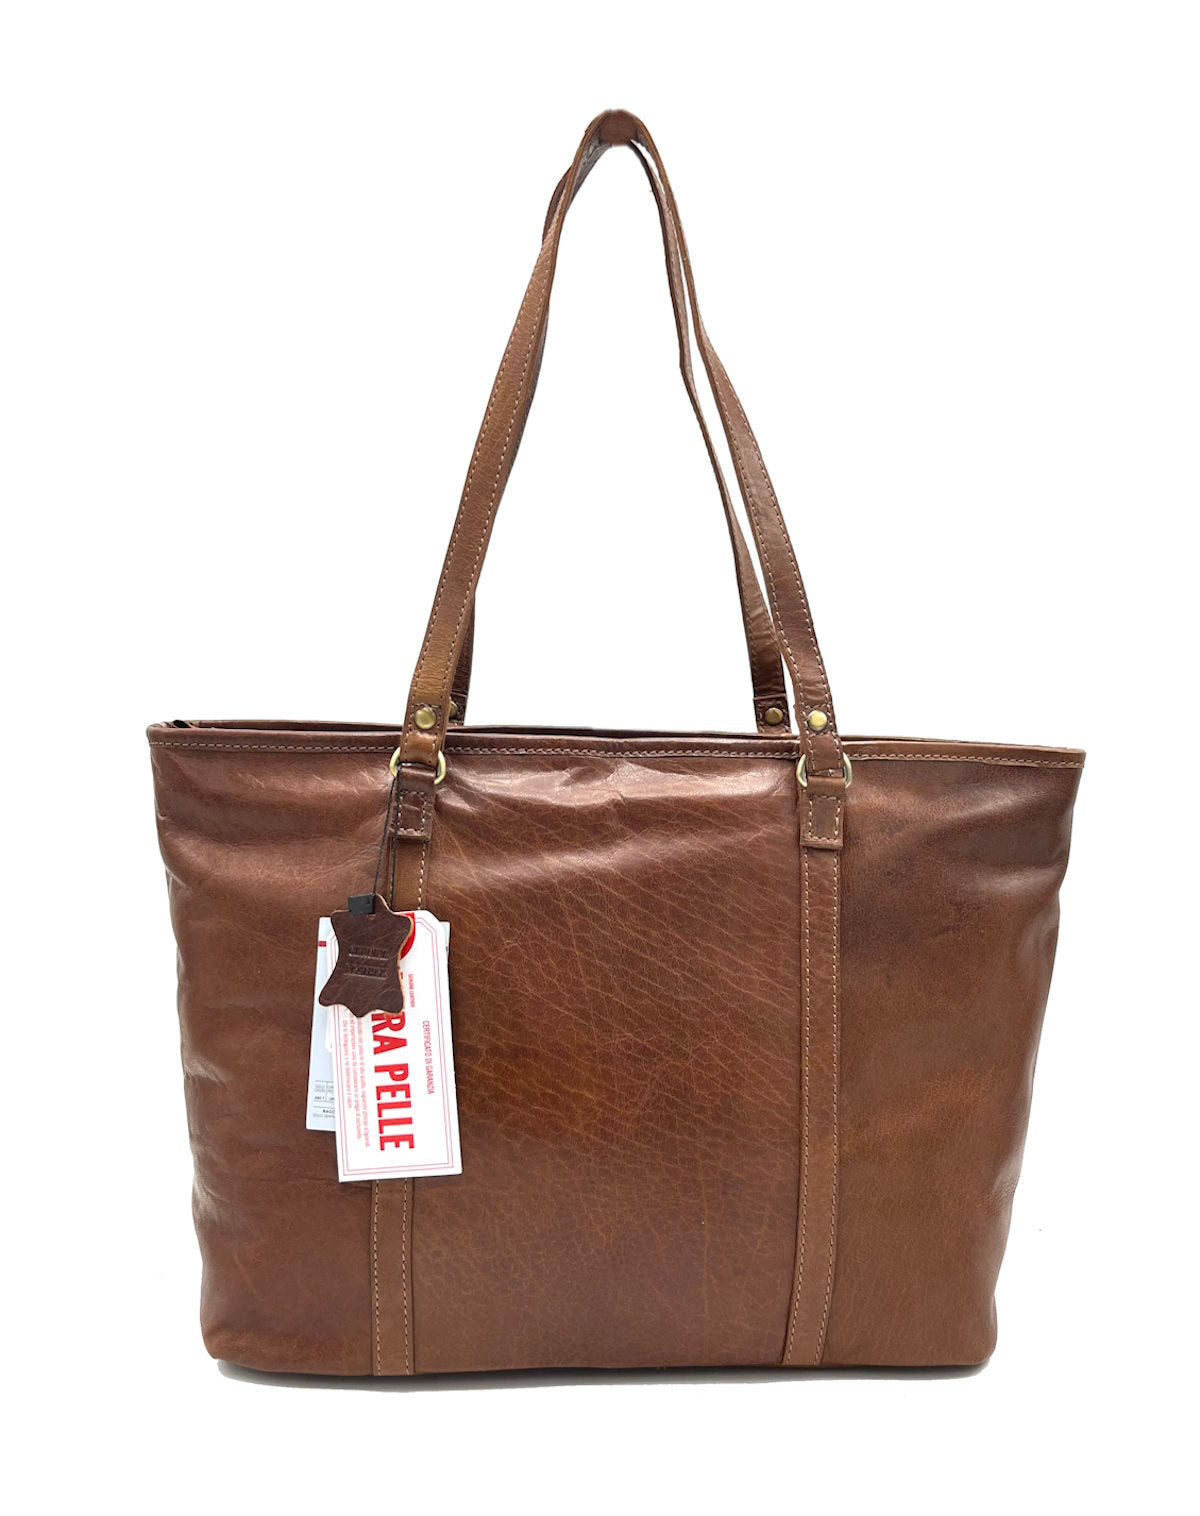 Genuine Leather shoulder bag, Brand Basile,  art. BA3539TI.392